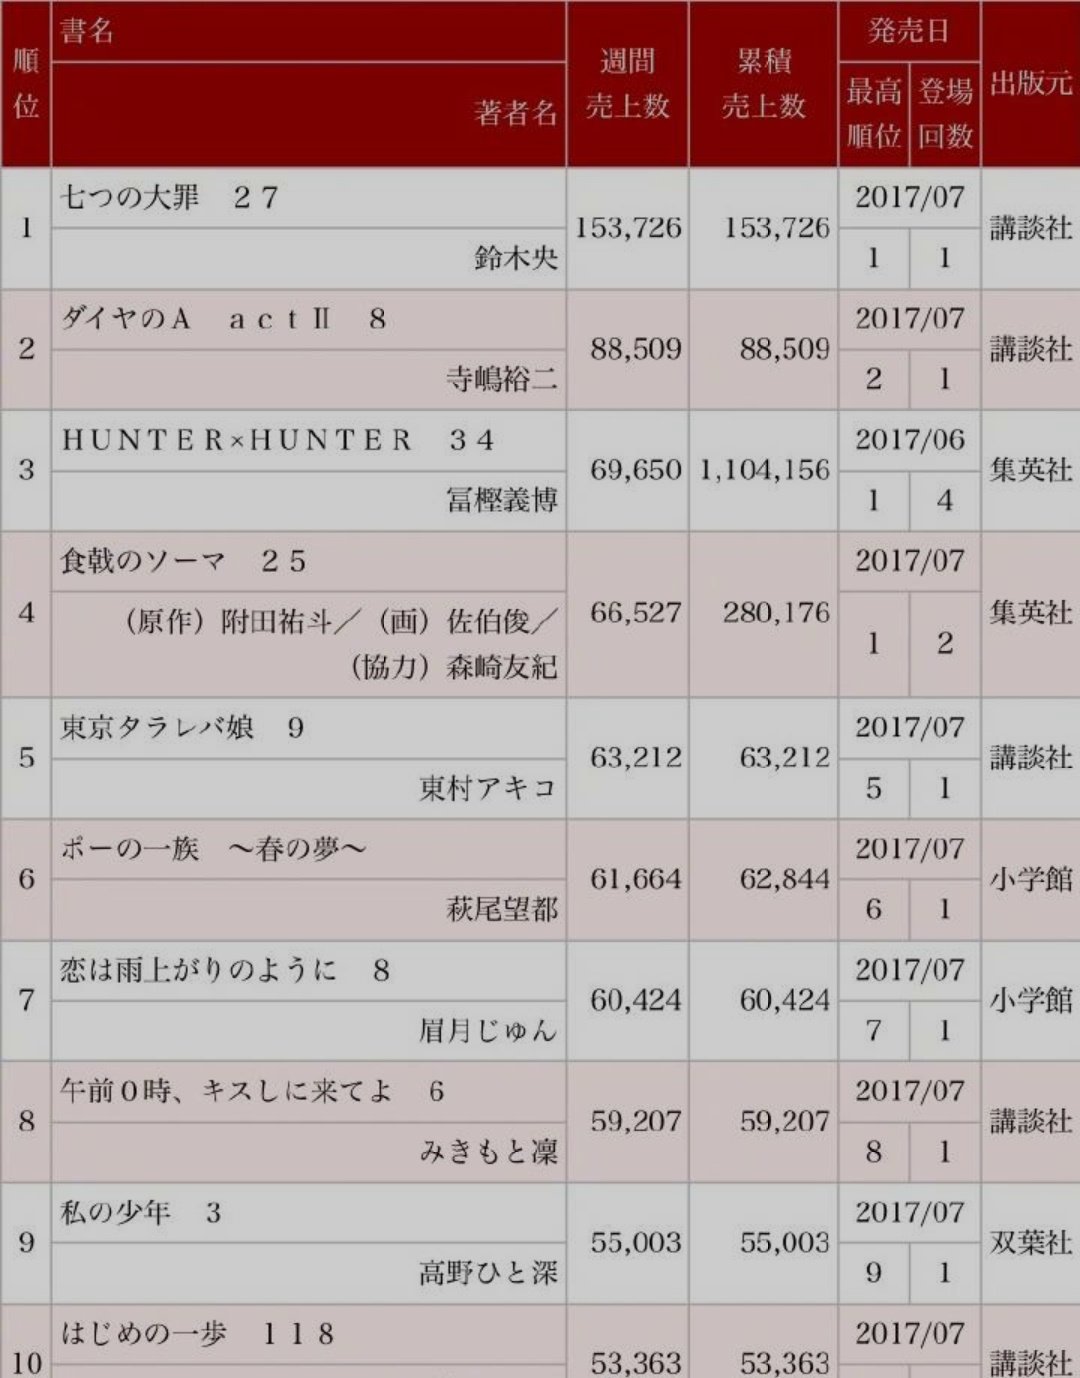 Hunter Hunter Hunter X Hunter Volume 34 Sales Still Showing Its In The Top 3 T Co Vadhktza8g Twitter